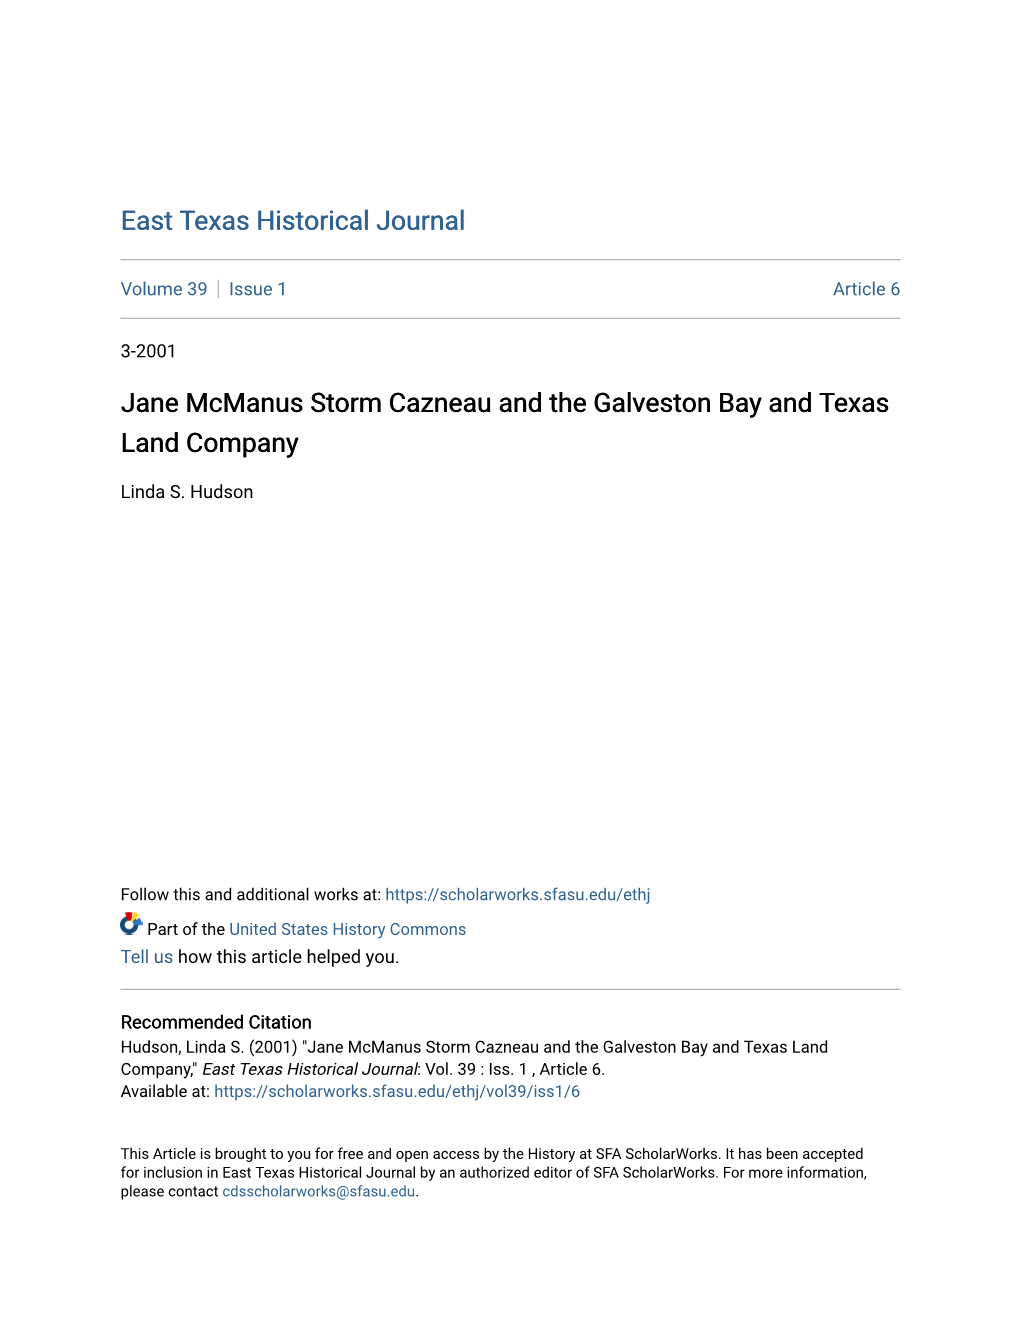 Jane Mcmanus Storm Cazneau and the Galveston Bay and Texas Land Company